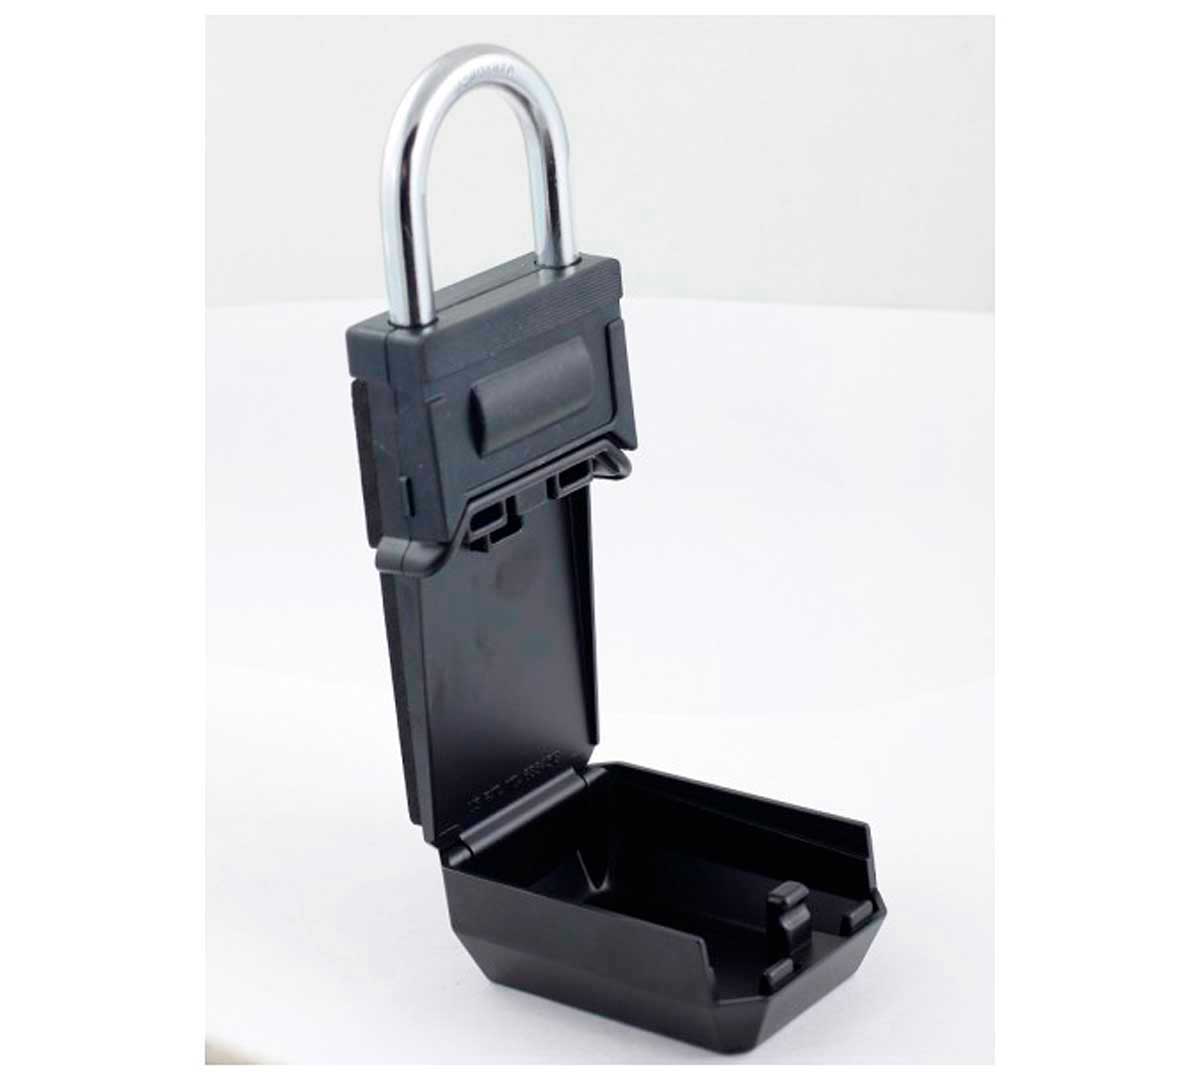 Keeper seg011 - Seguridad para objetos